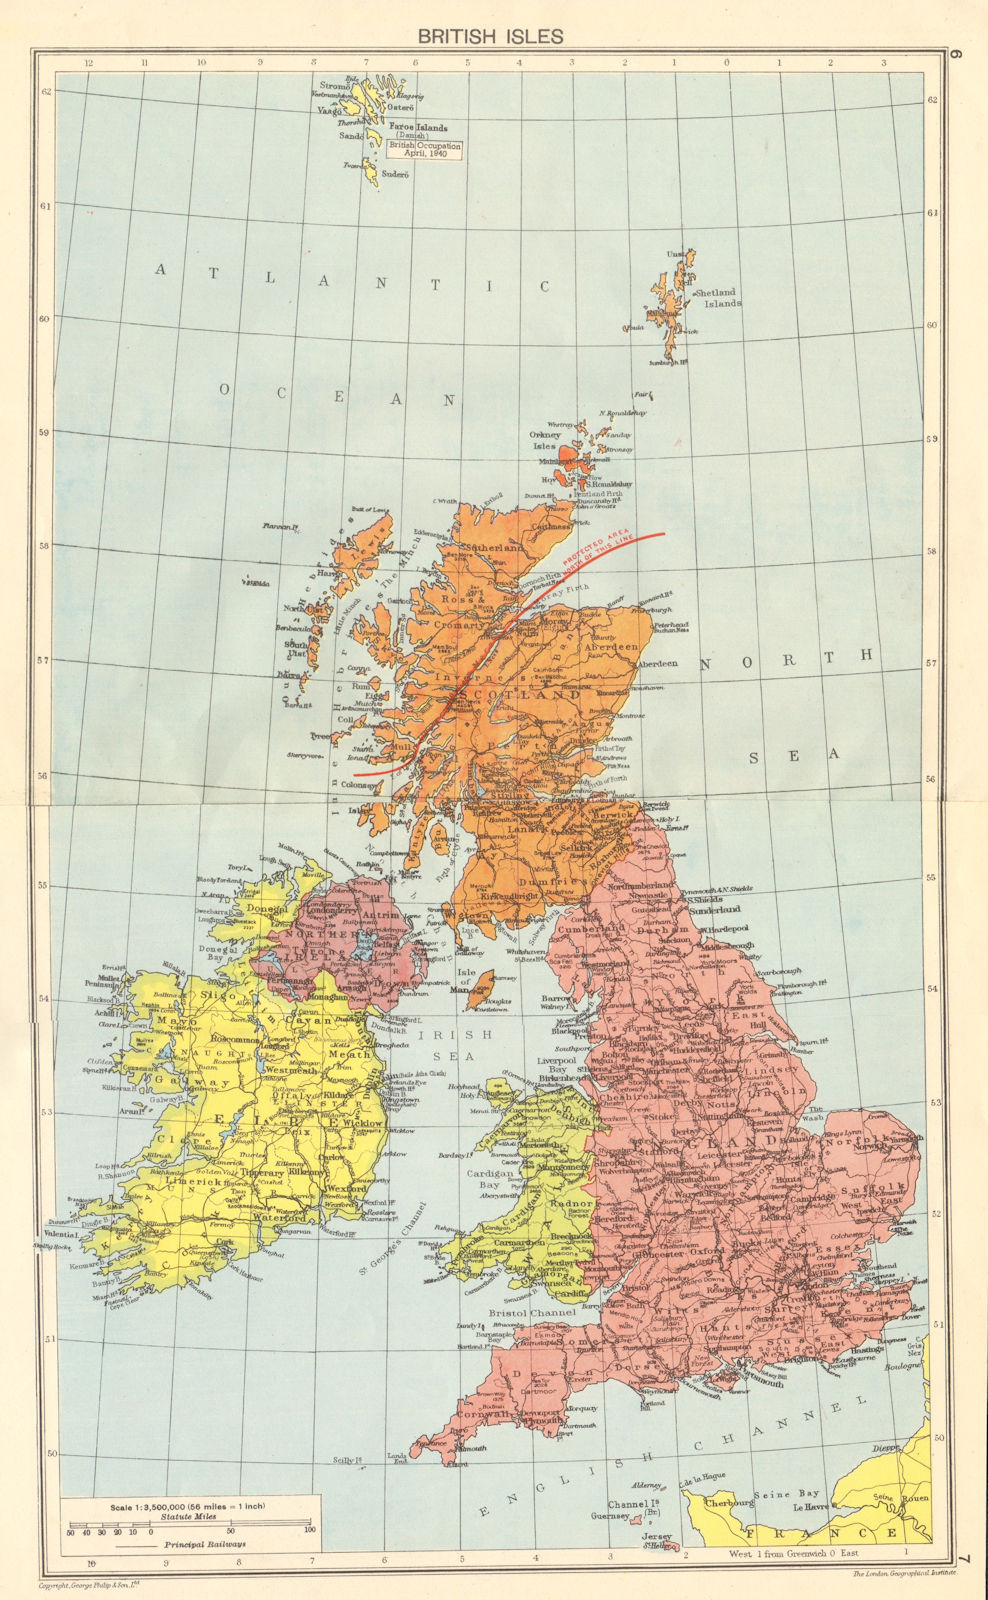 WORLD WAR 2 British Isles. Occupied Faroe isles Scotland protected area 1942 map